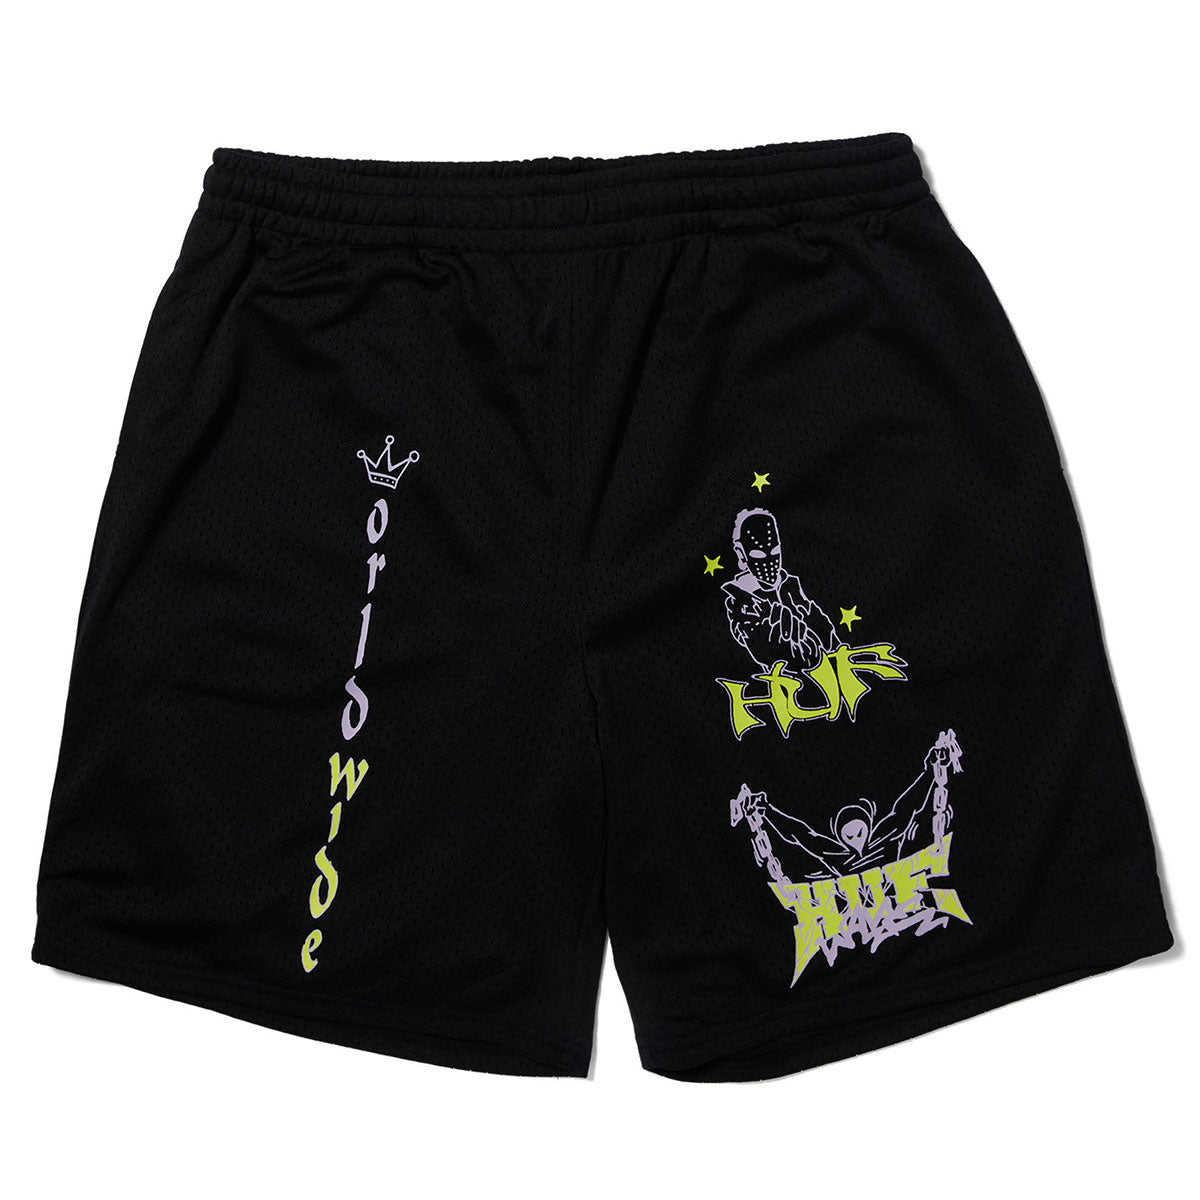 HUF Zine Mesh Basketball Shorts - Black image 1